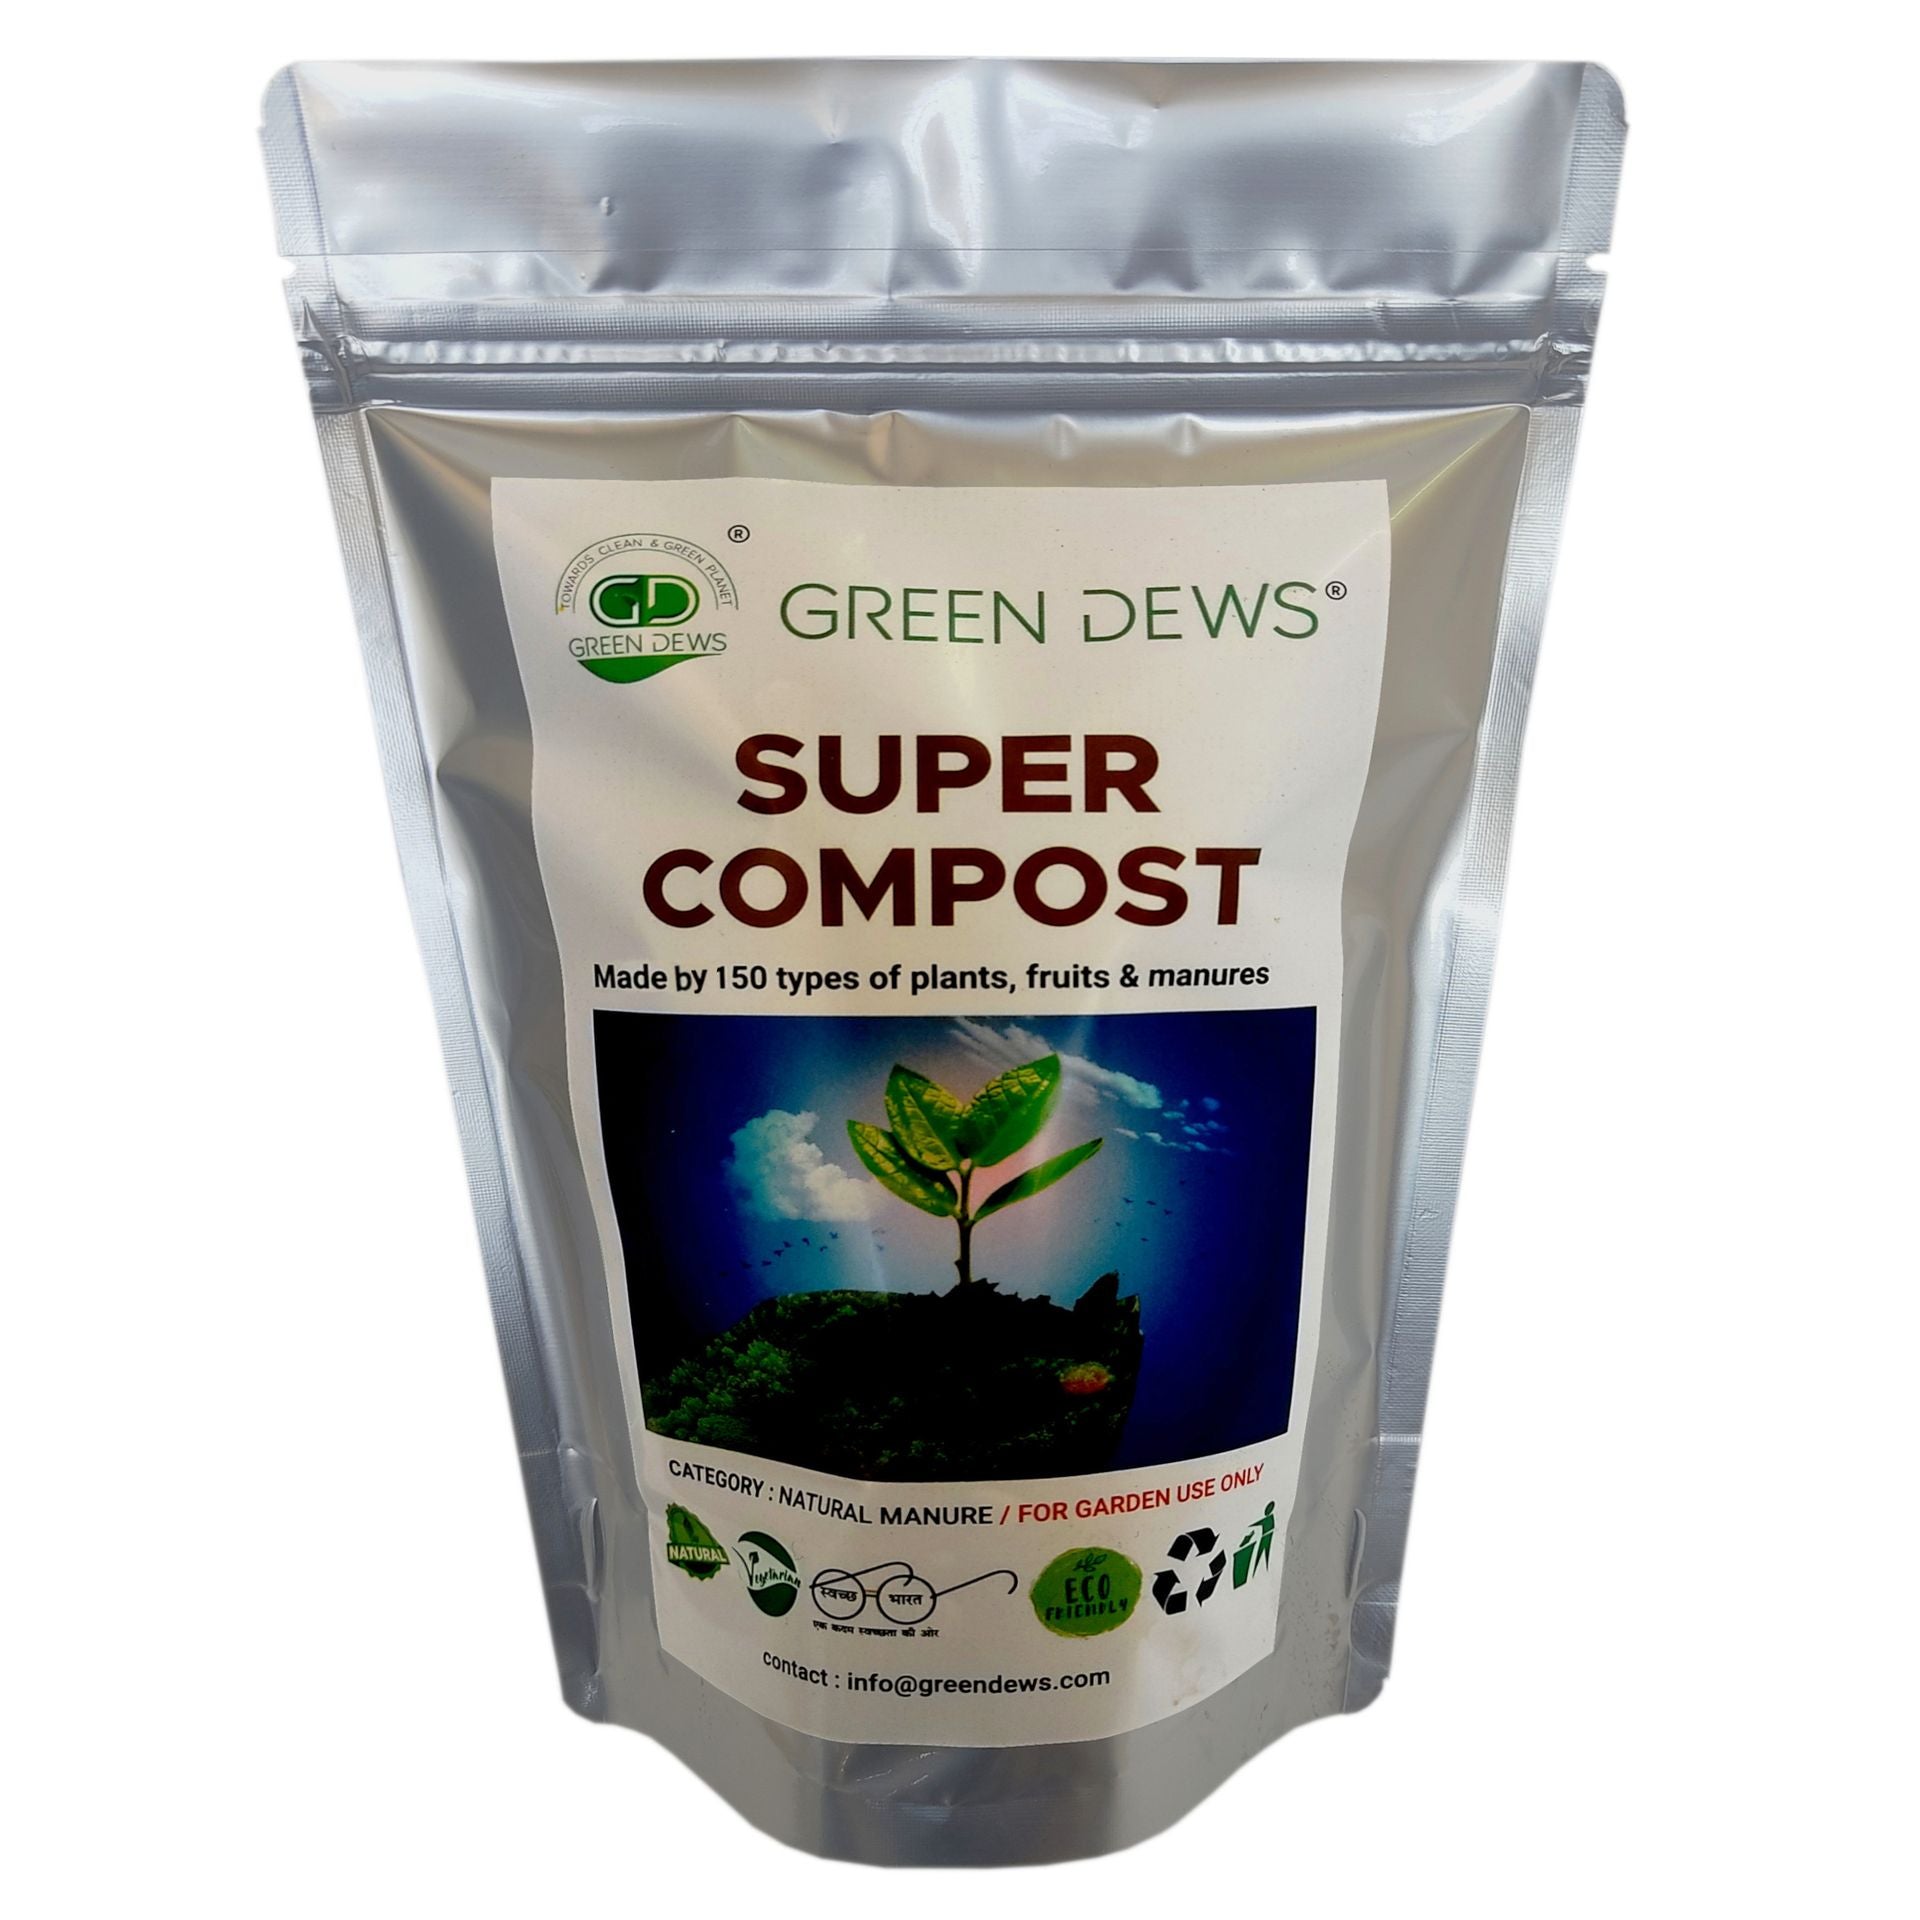 GREEN DEWS SUPER COMPOST BALANCED FERTILIZER NATURAL PLANT GROWTH PROMOTER MICRO & MACRO NUTRIENTS - hfnl!fe